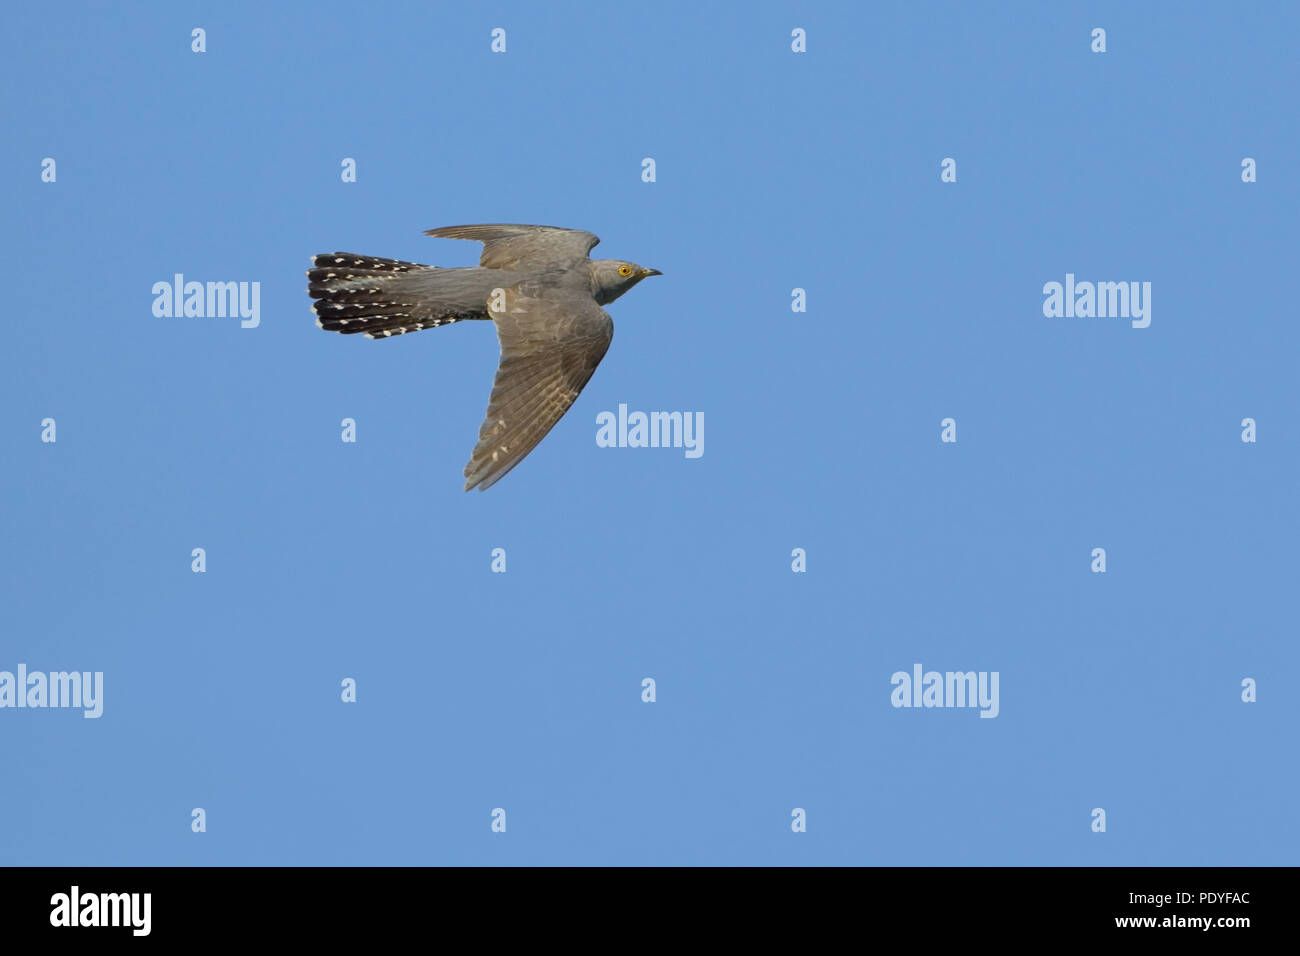 flying Cuckoo against blue sky. Stock Photo